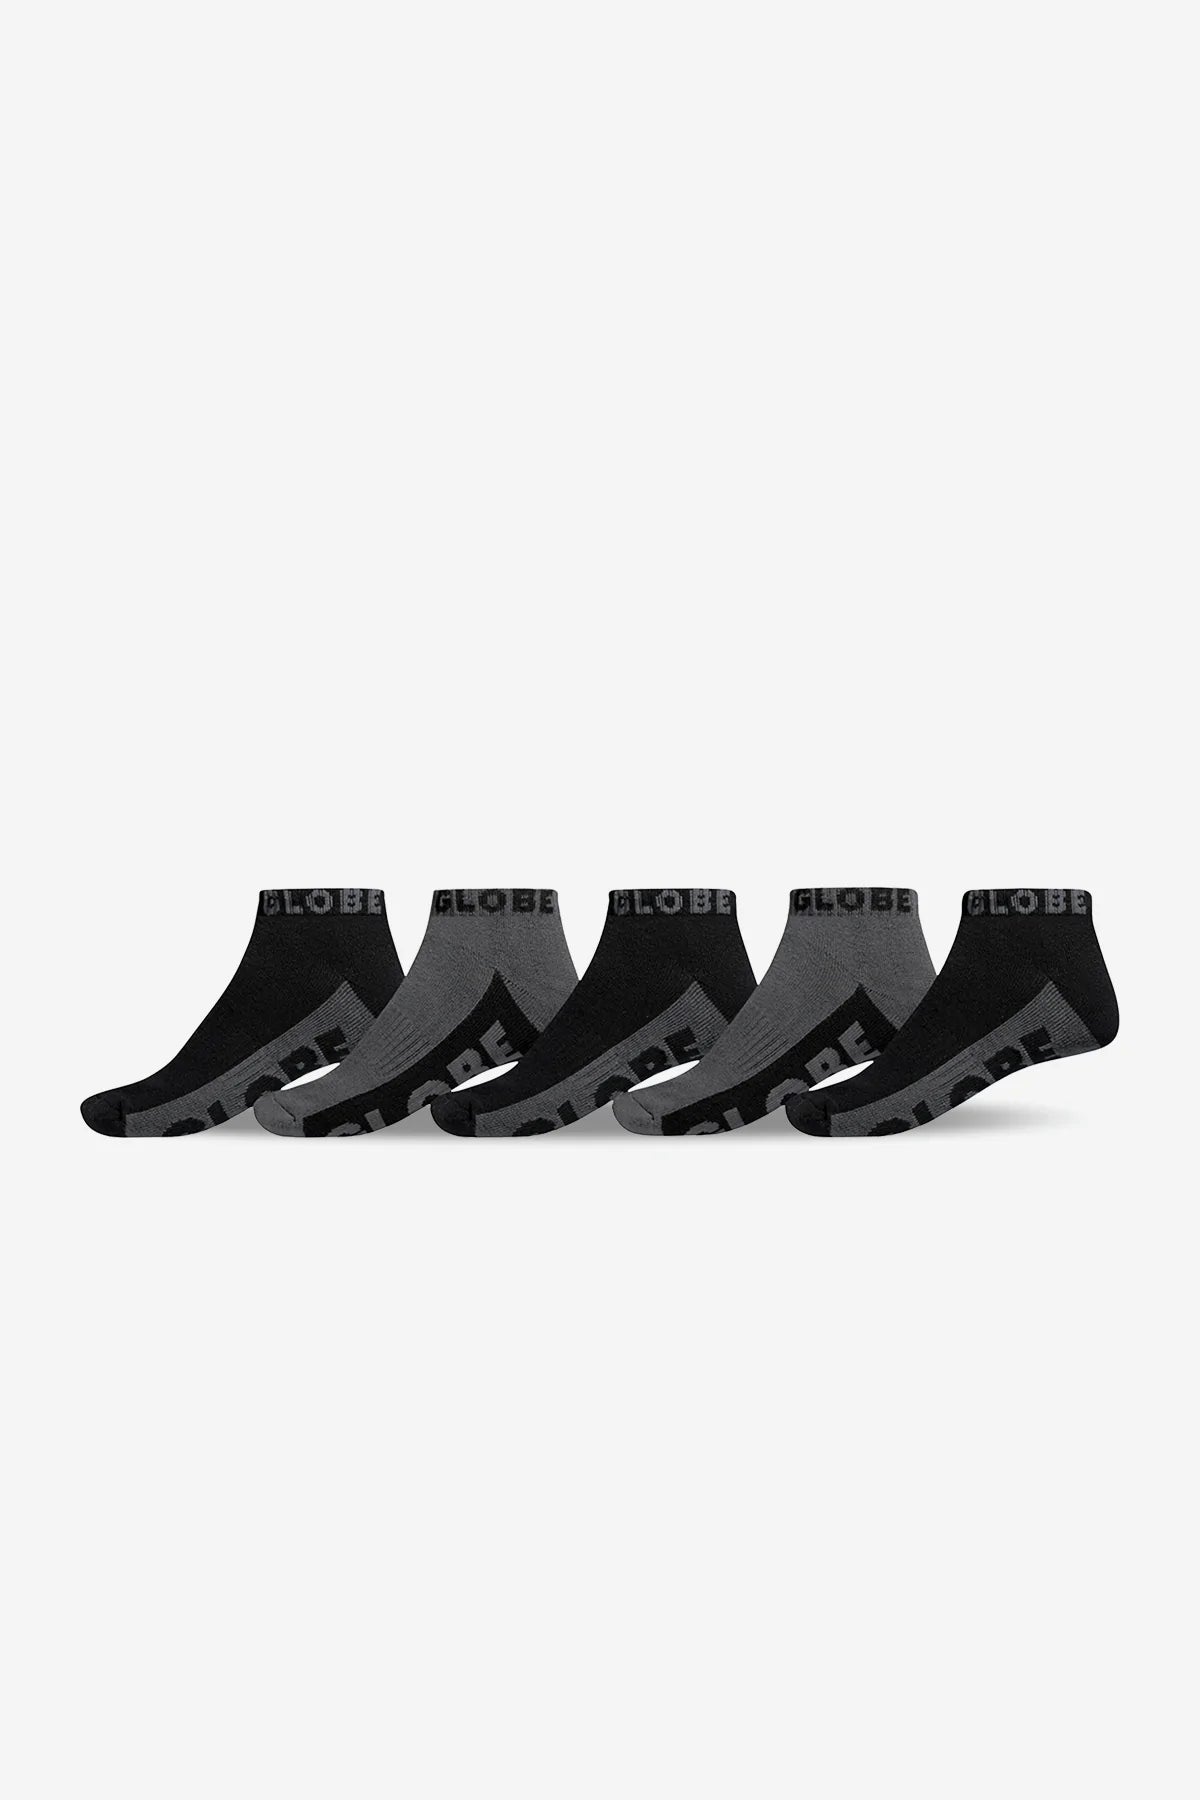 Globe Shoes - Black/Grey Ankle Sock 5 Pack